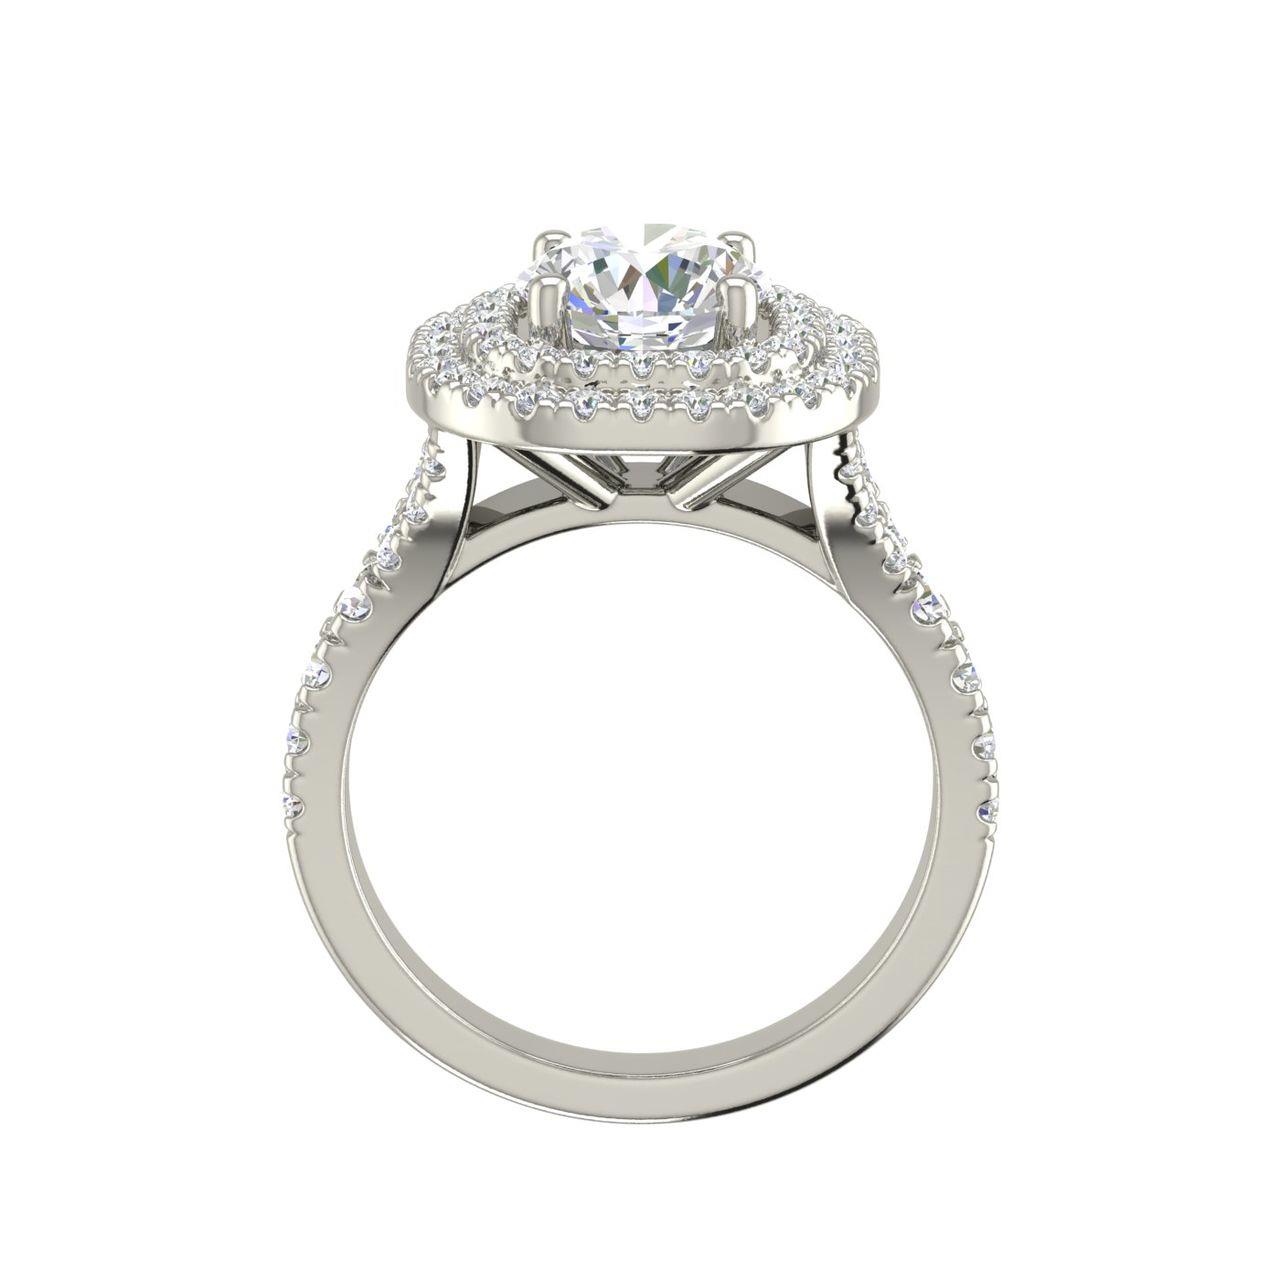 Double Halo 1.25 Carat Round Cut Diamond Engagement Ring